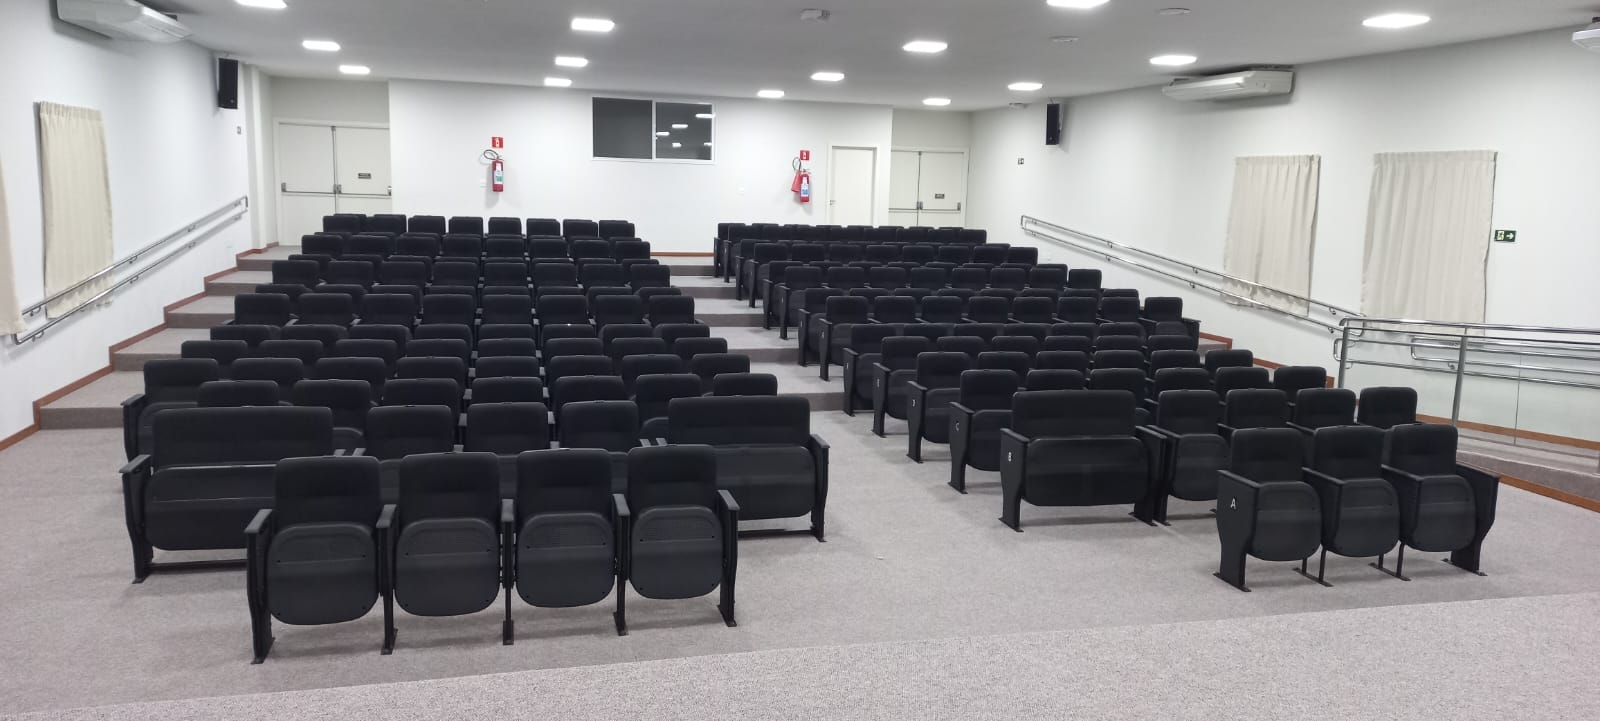 Sala de Cinema Canaã oferta programação cultural gratuita em Santa Teresa